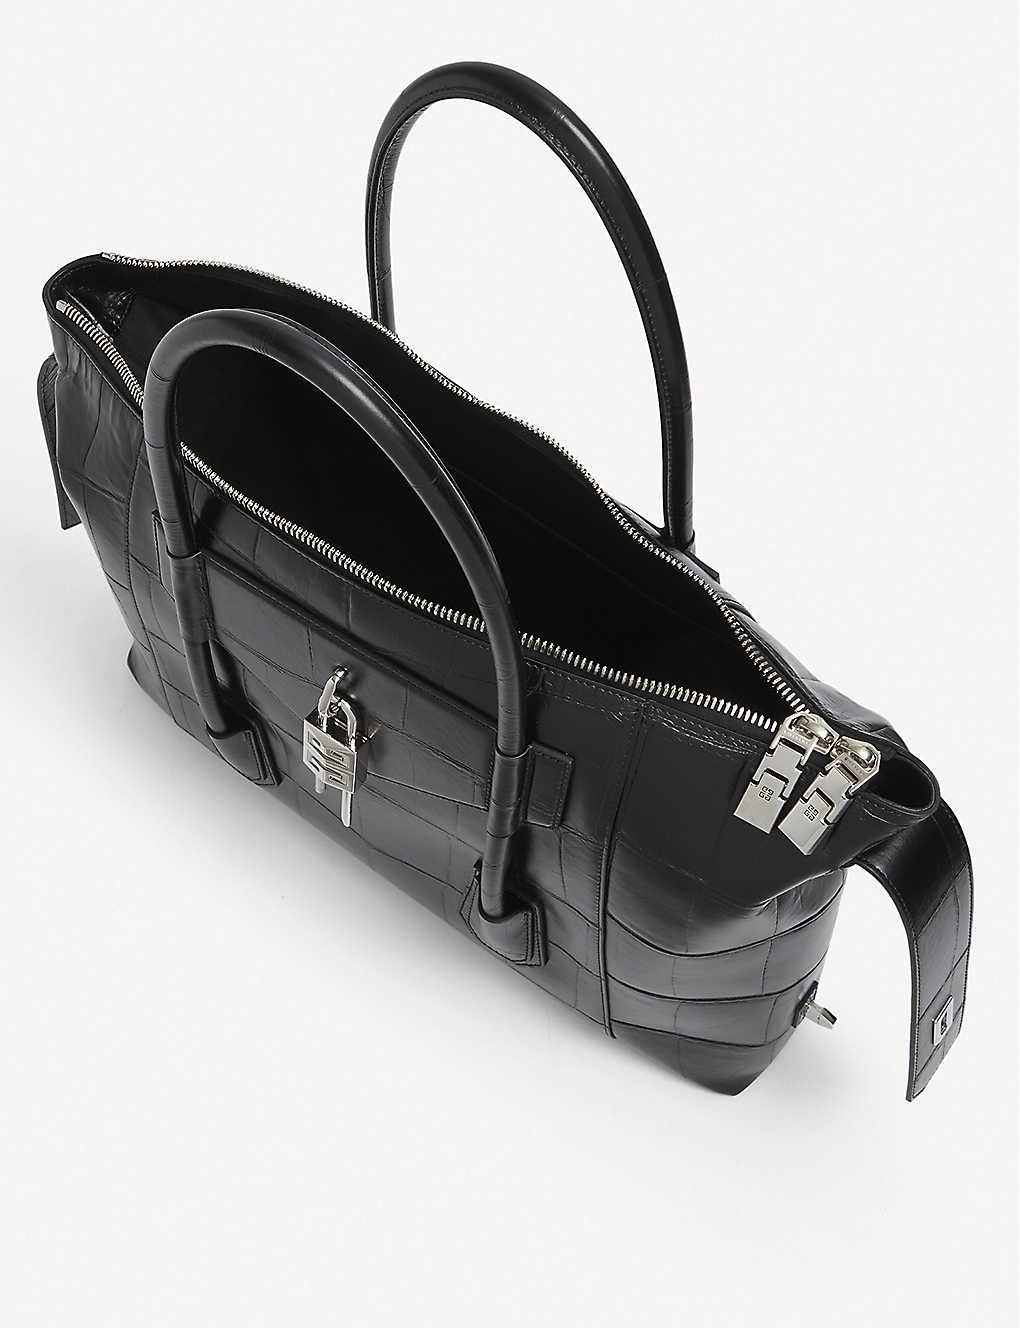 Givenchy Small Leather Antigona Soft Bag in Black